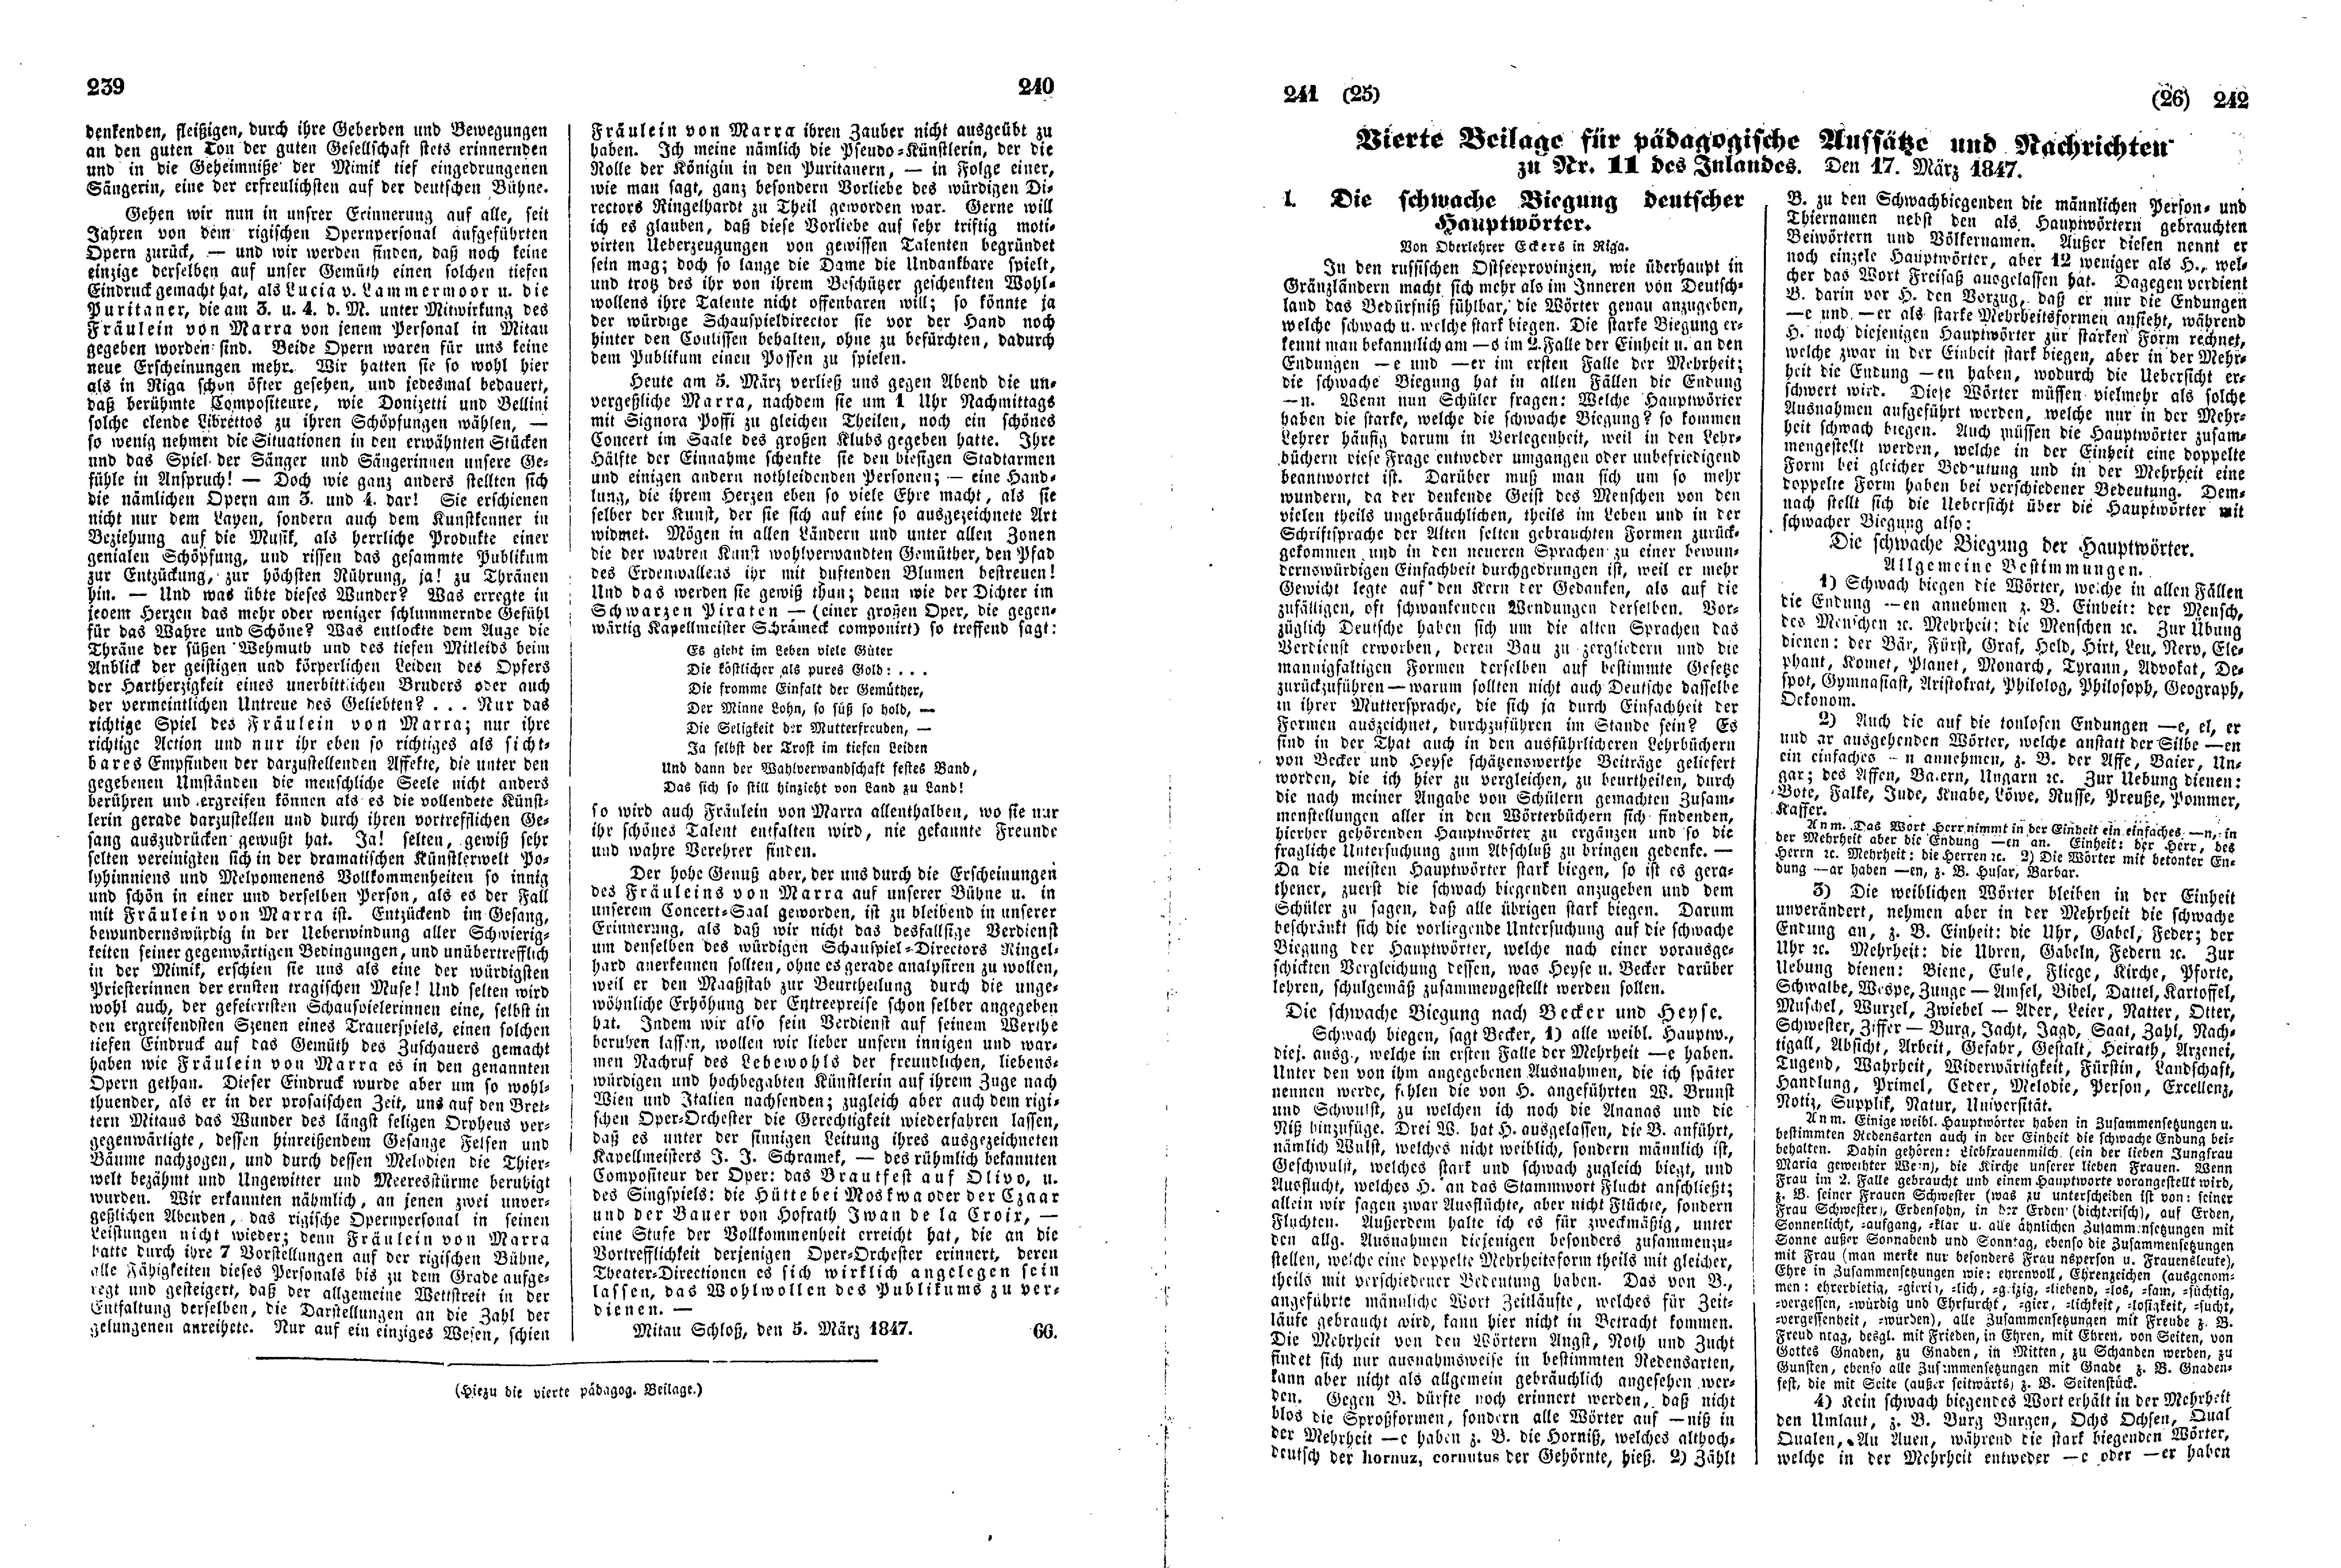 Das Inland [12] (1847) | 65. (239-242) Main body of text